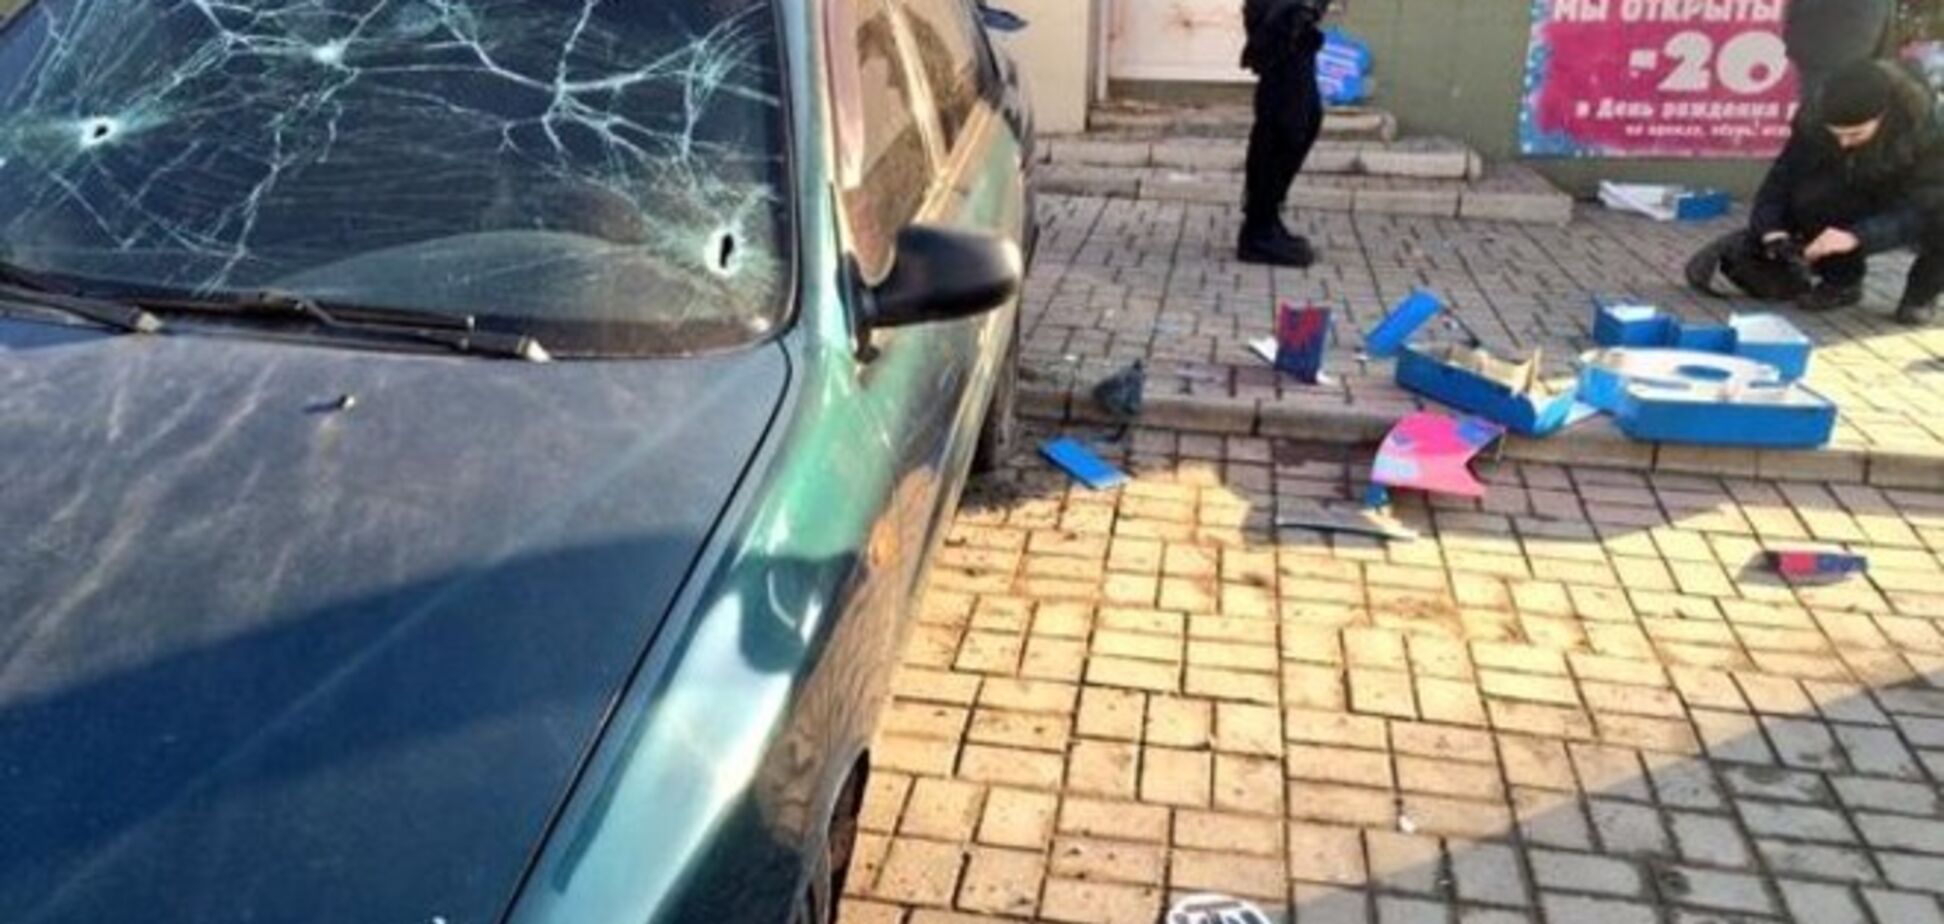 Три жителя погибли и 12 ранены из-за обстрела в центре Донецка: опубликовано фото и видео